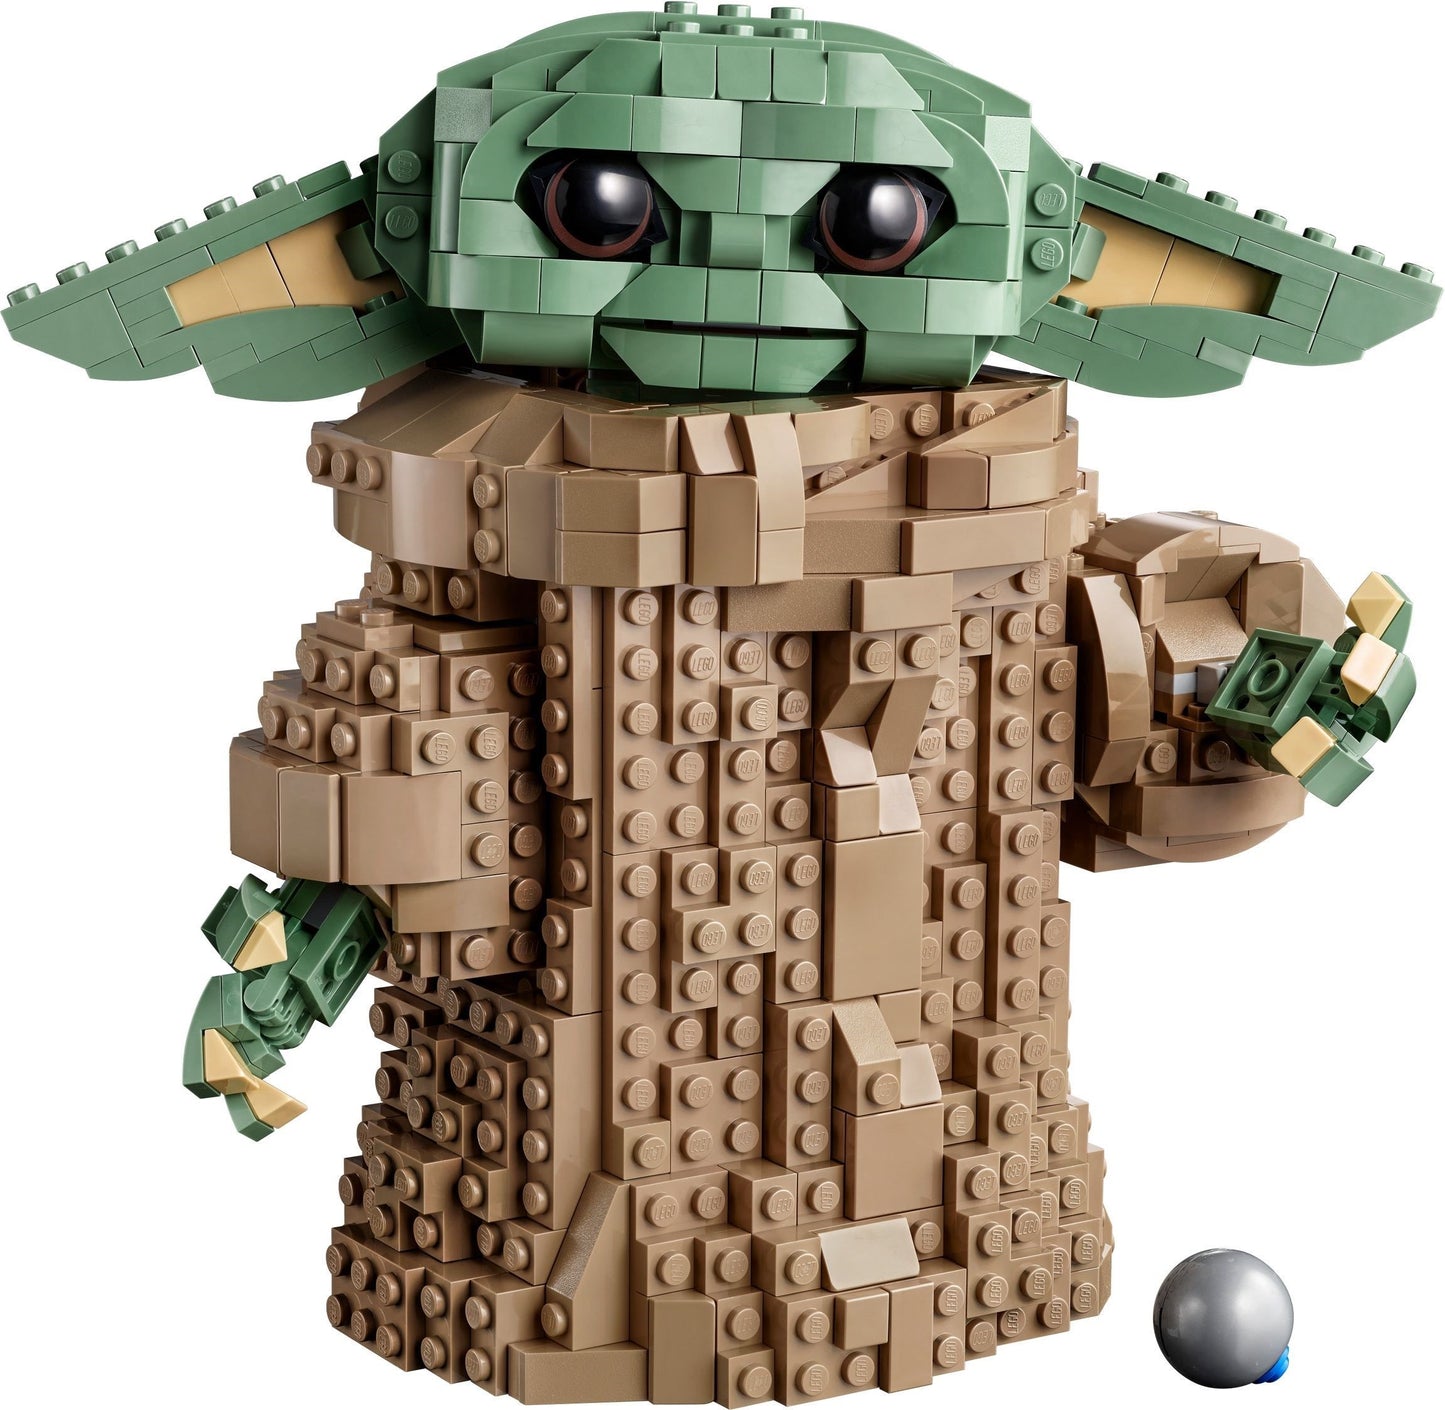 75318 - LEGO Star Wars - The Child